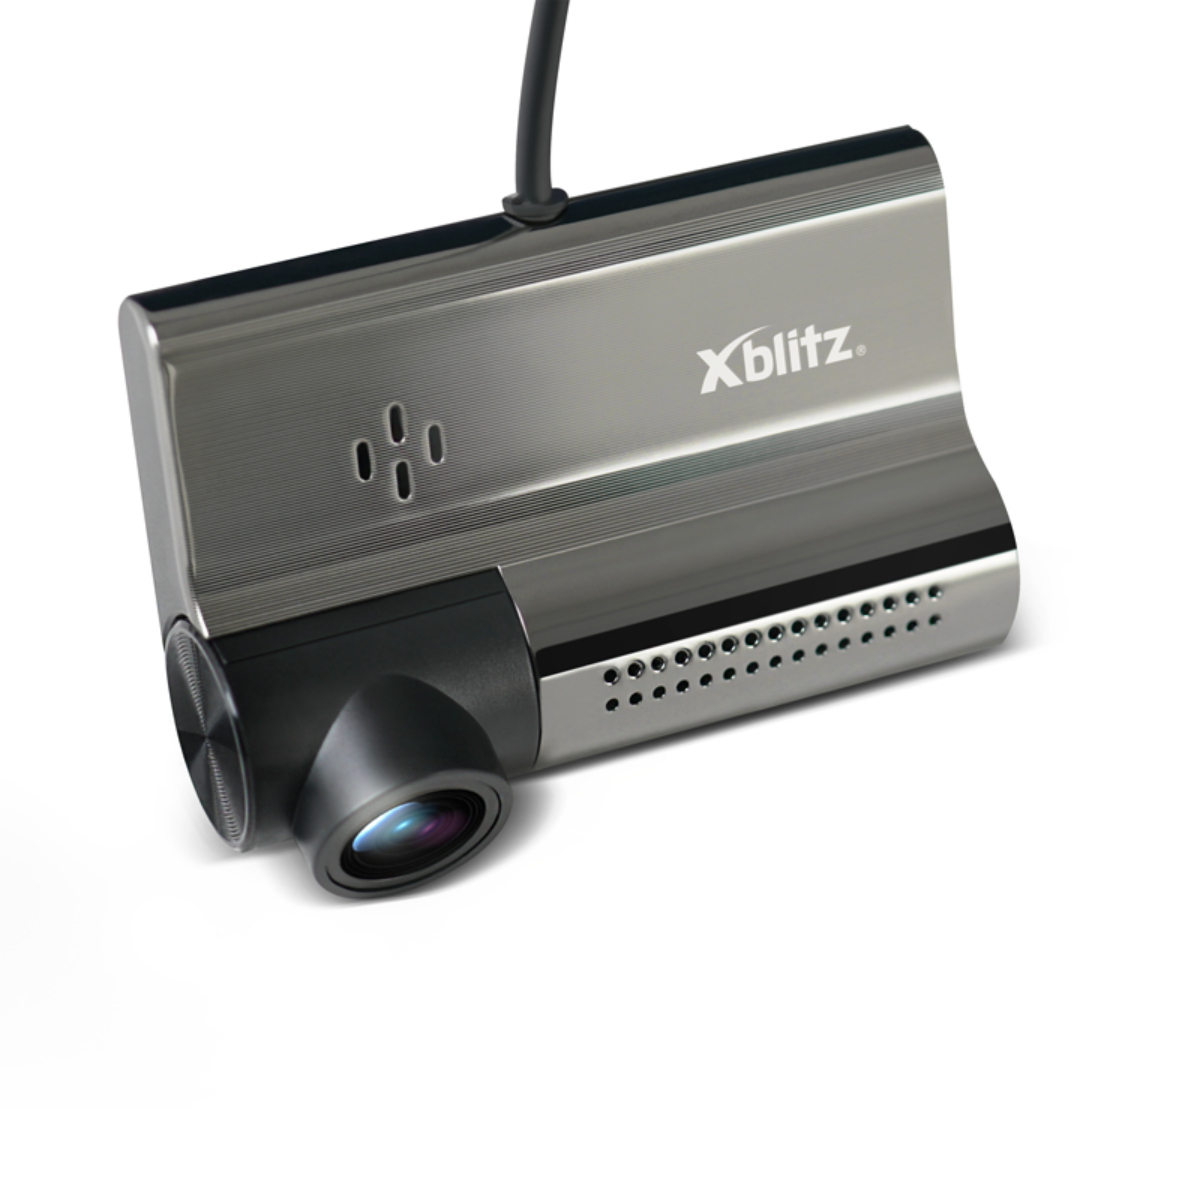 WiFi XBLITZ Display Dashcam X6